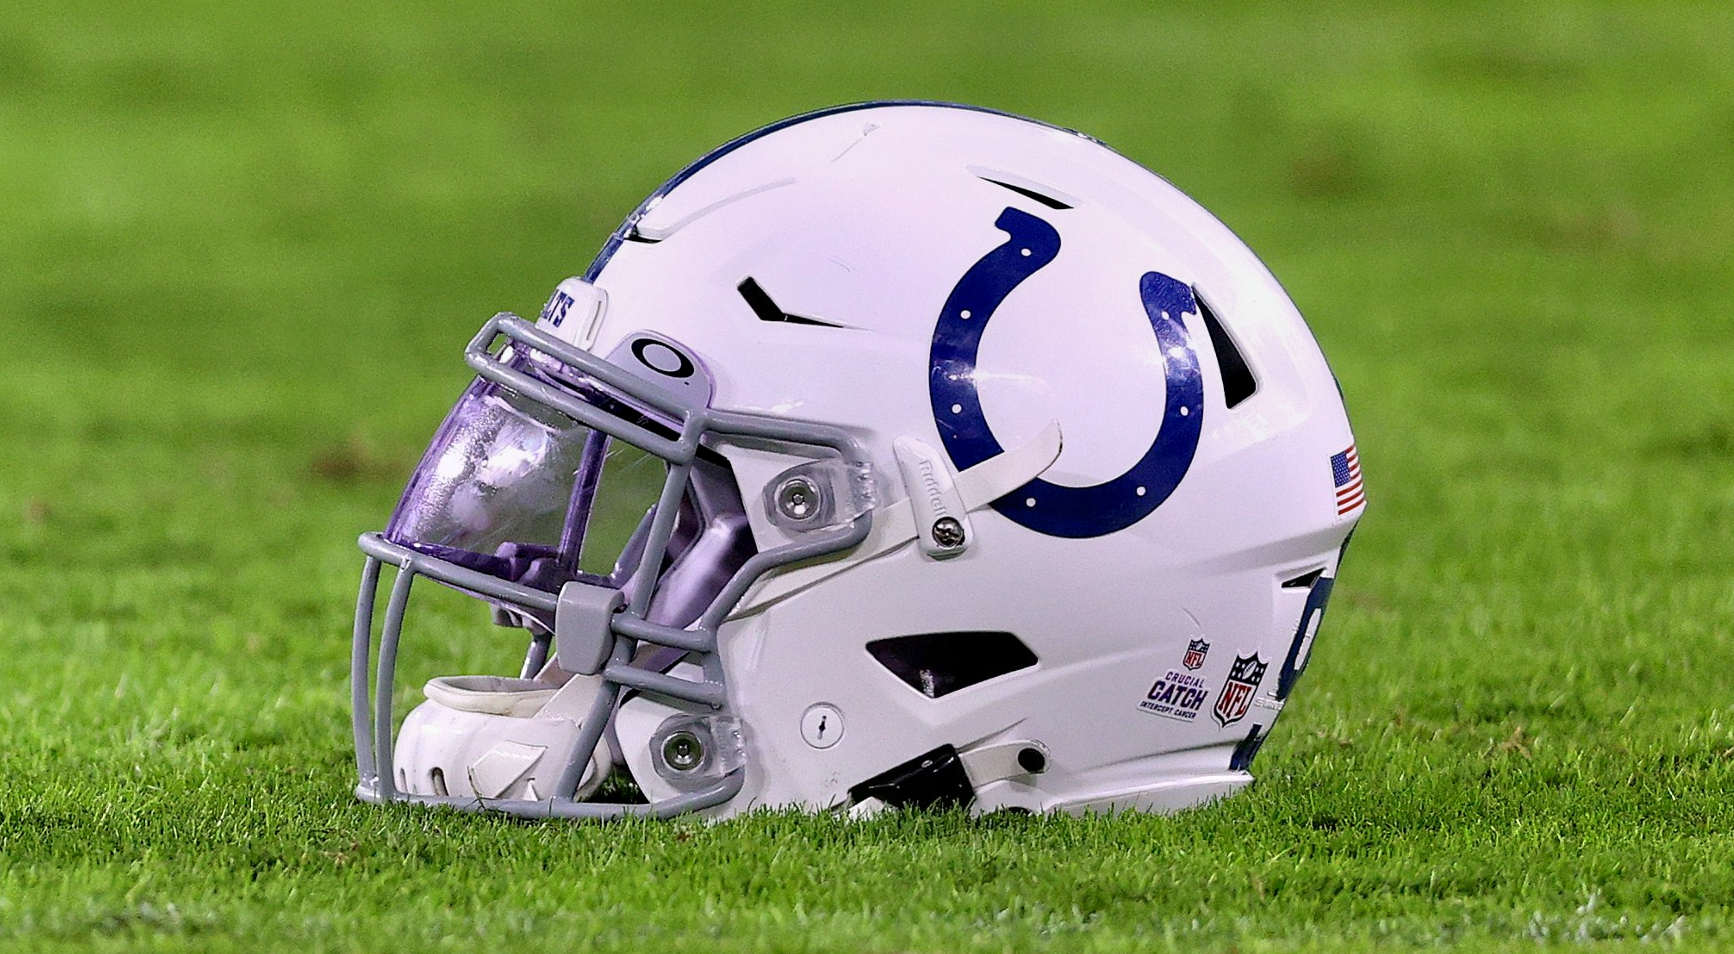 Colts helmet on field.